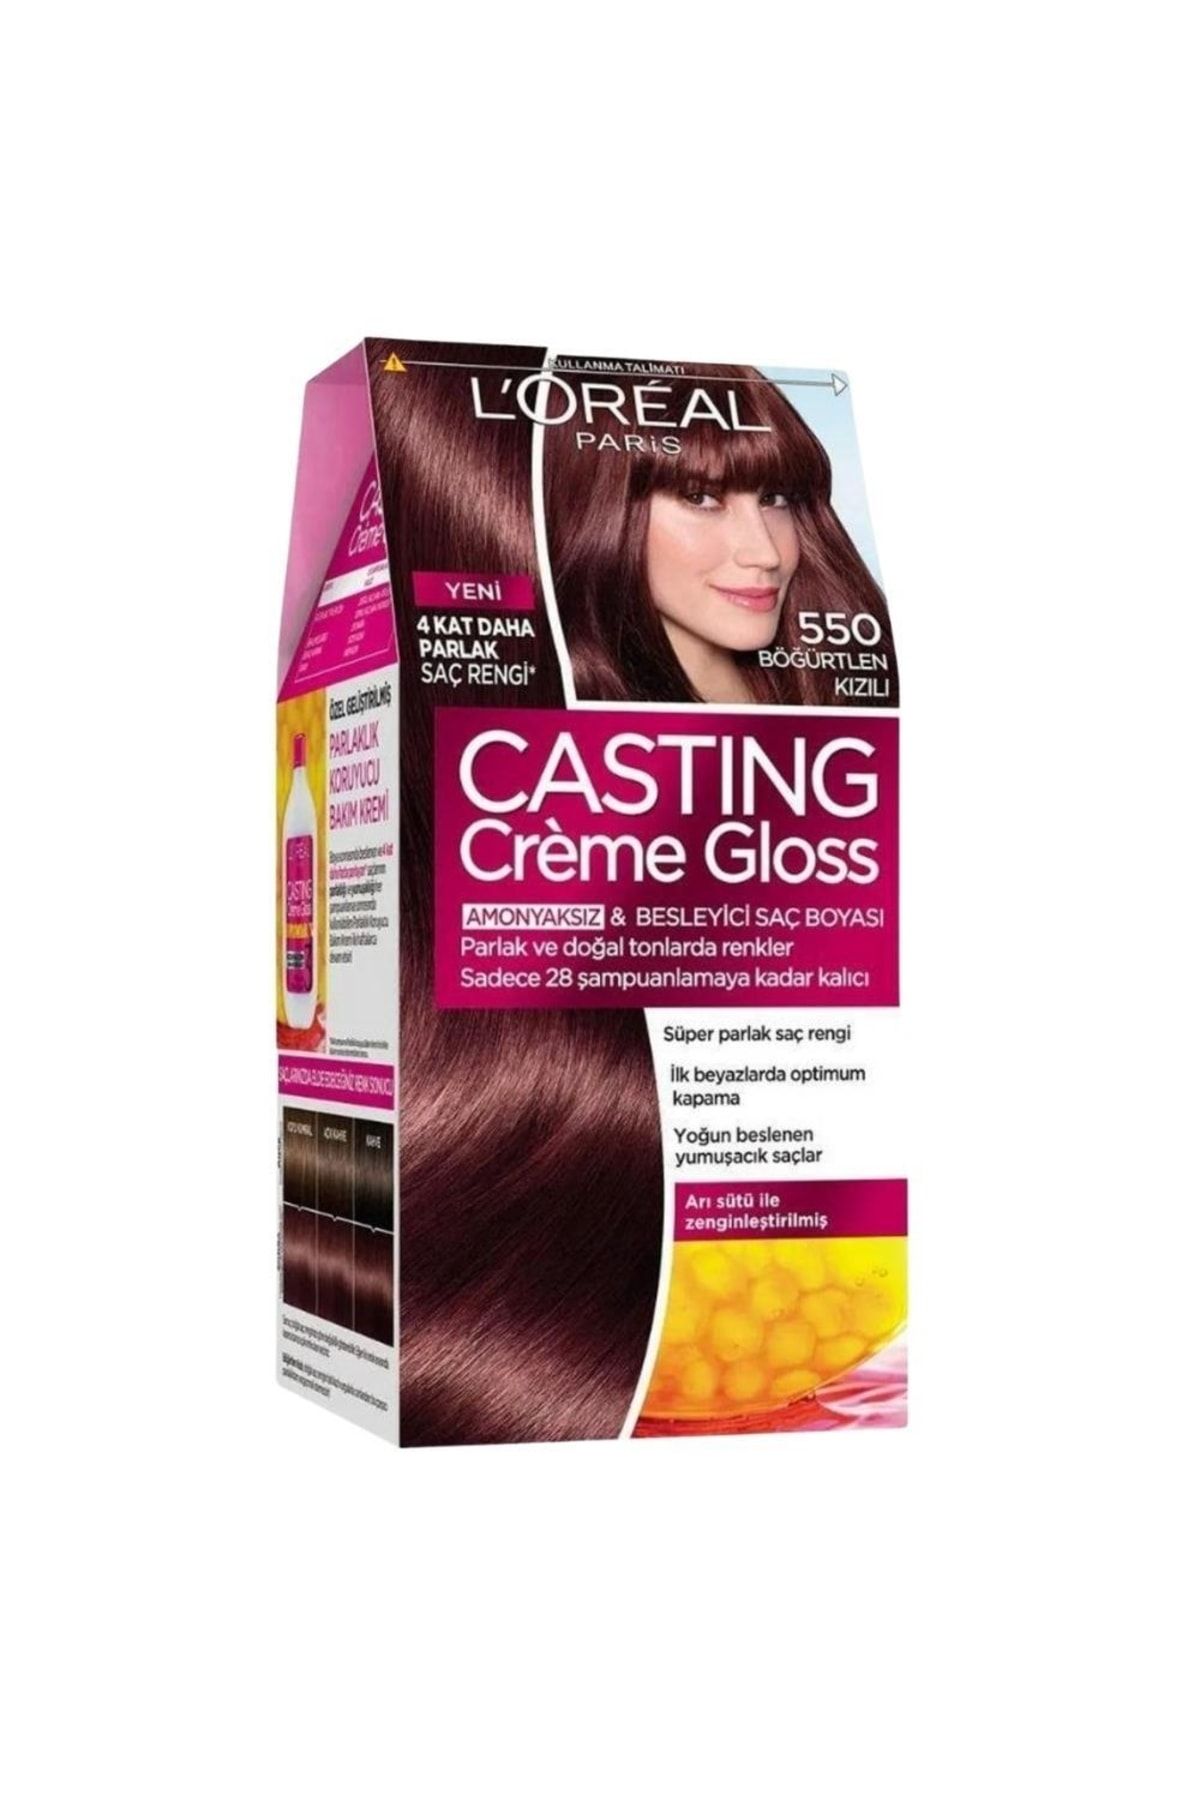 L'Oreal Paris Casting Creme Gloss Saç Boyası - 550 Böğürtlen Kızılı